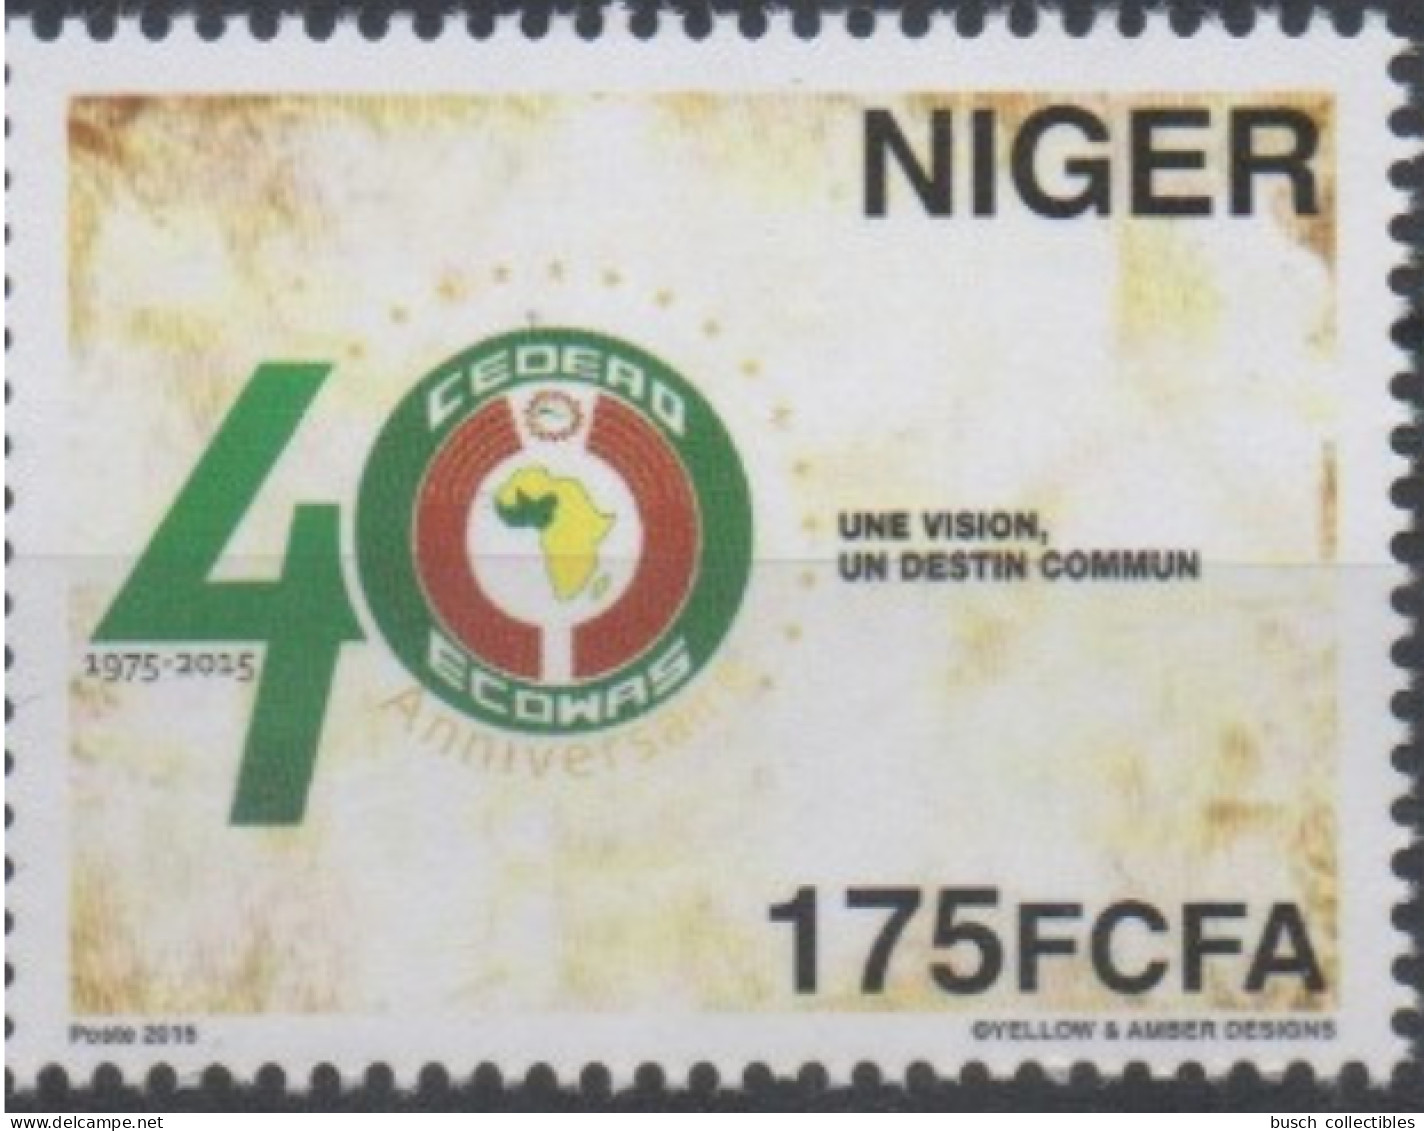 Niger 2015 Emission Commune Joint Issue CEDEAO ECOWAS 40 Ans 40 Years - Gezamelijke Uitgaven